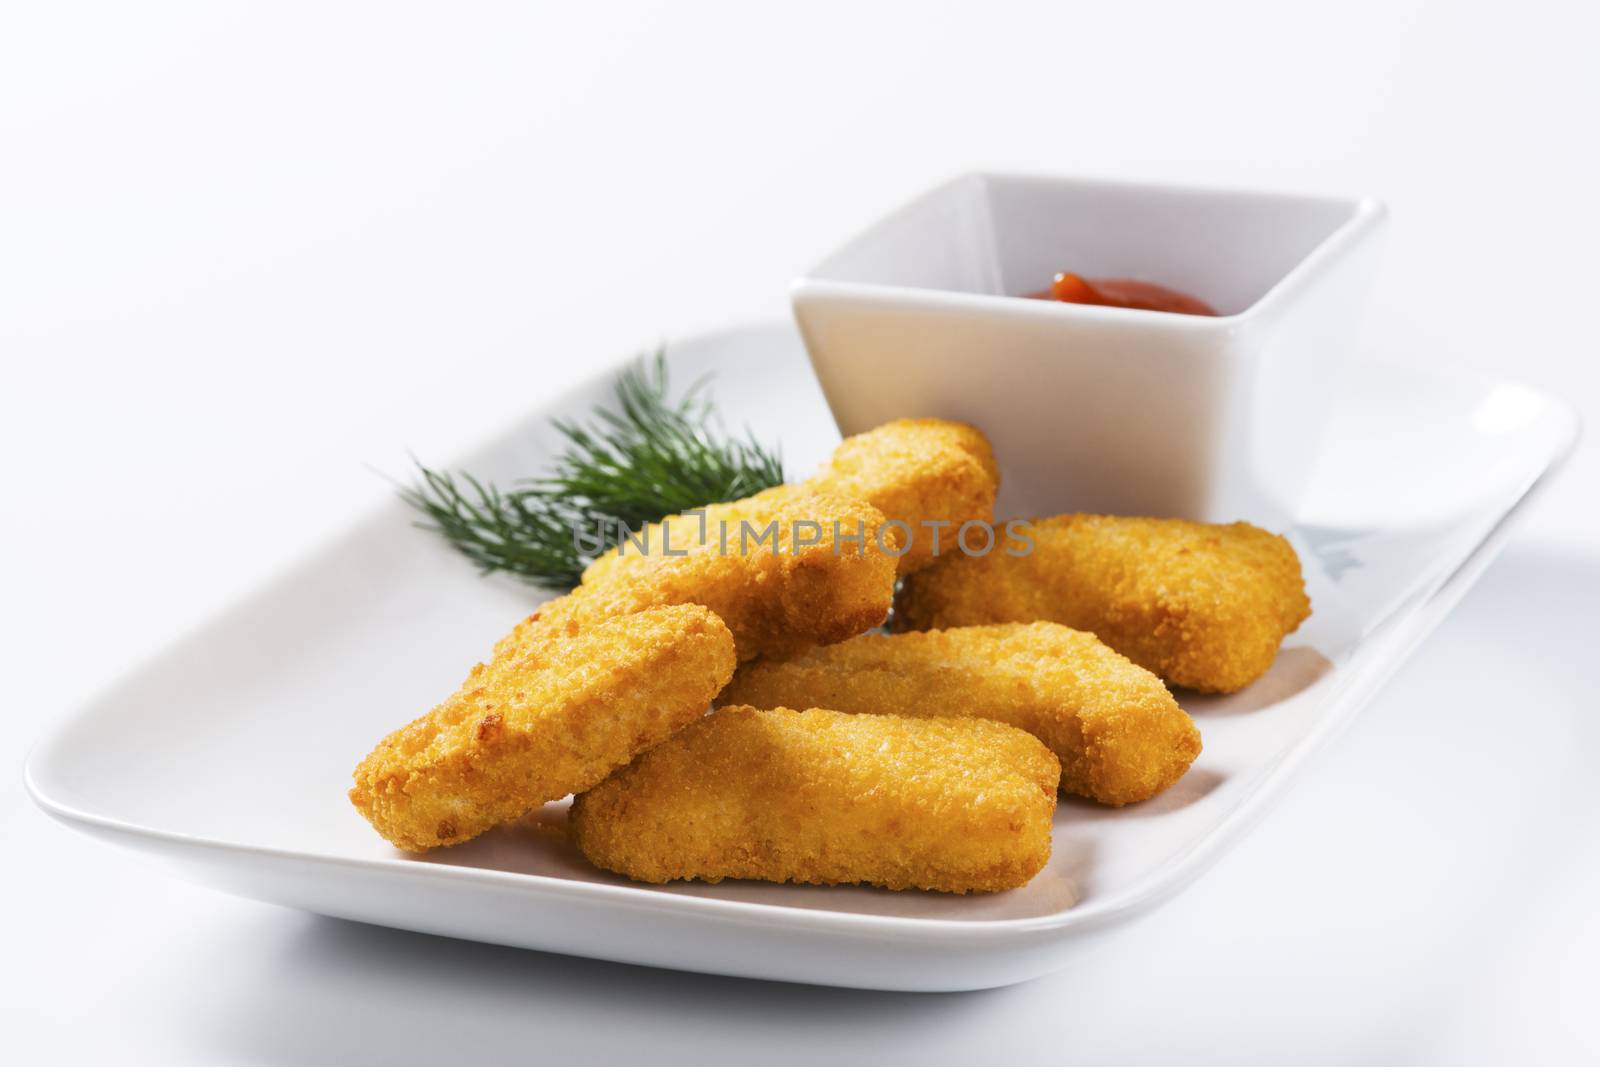 Chicken nuggets by kzen